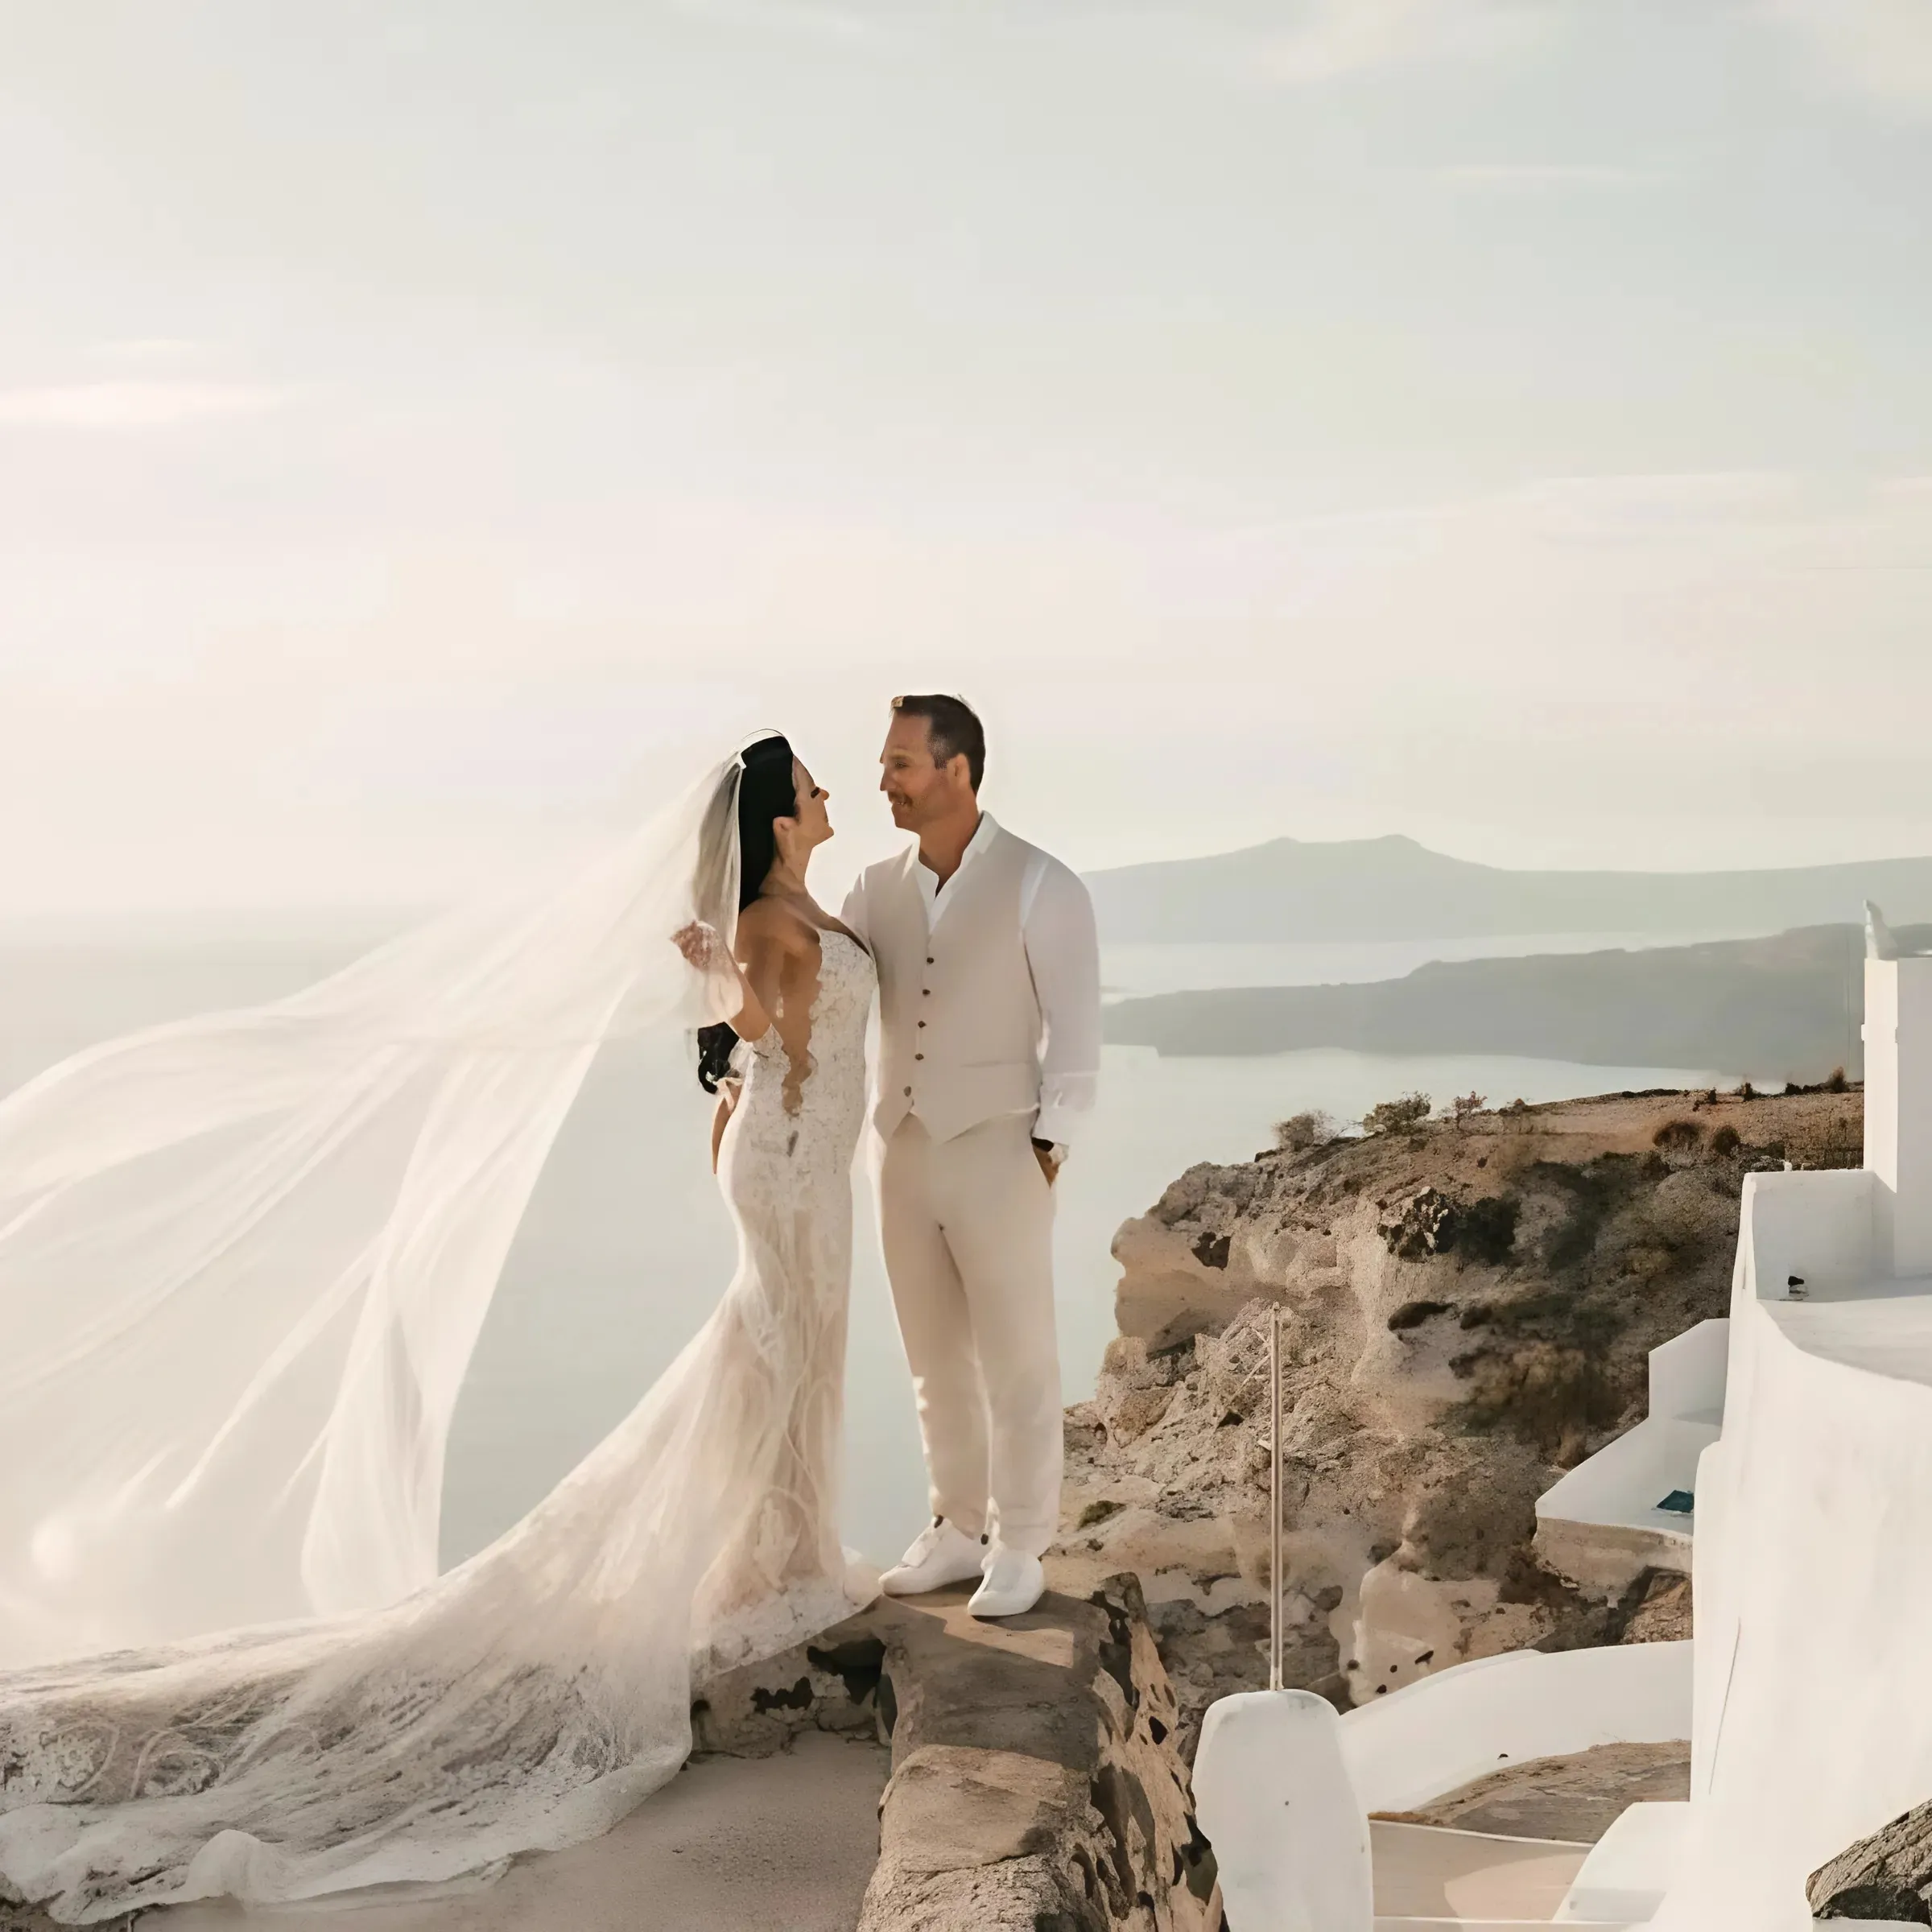 ‘Bachelor’ Winner Marries NFL Player in Intimate Italian Wedding